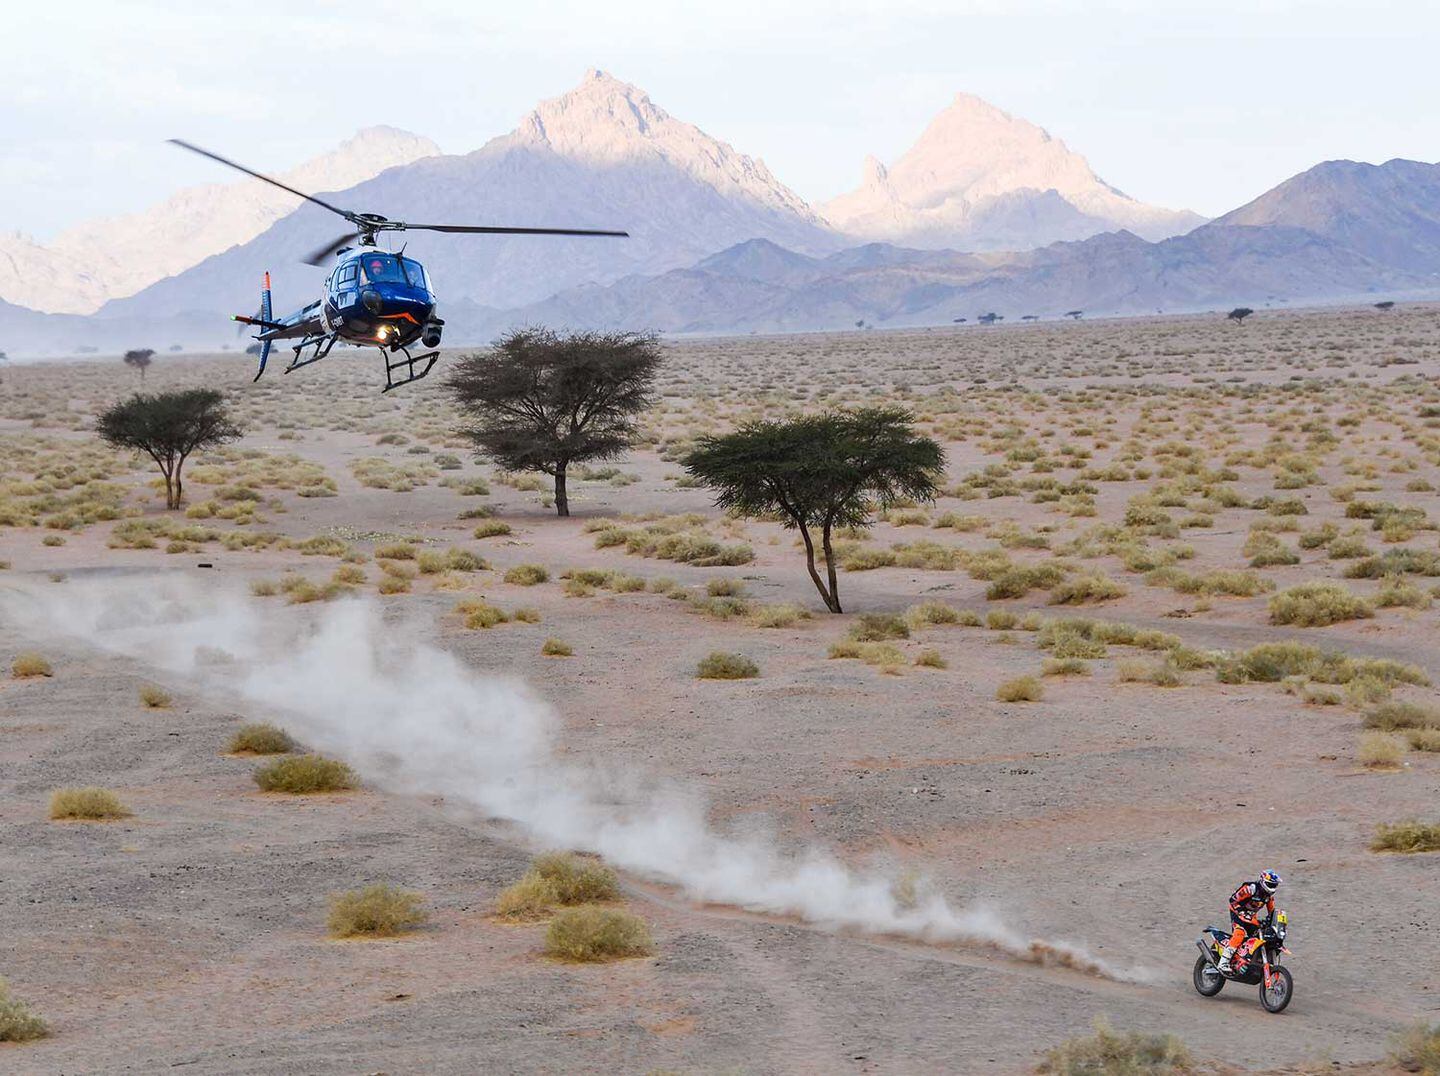 The Best Dakar Motorcycle Rally Photos 2020 Photo Gallery | Motorcyclist